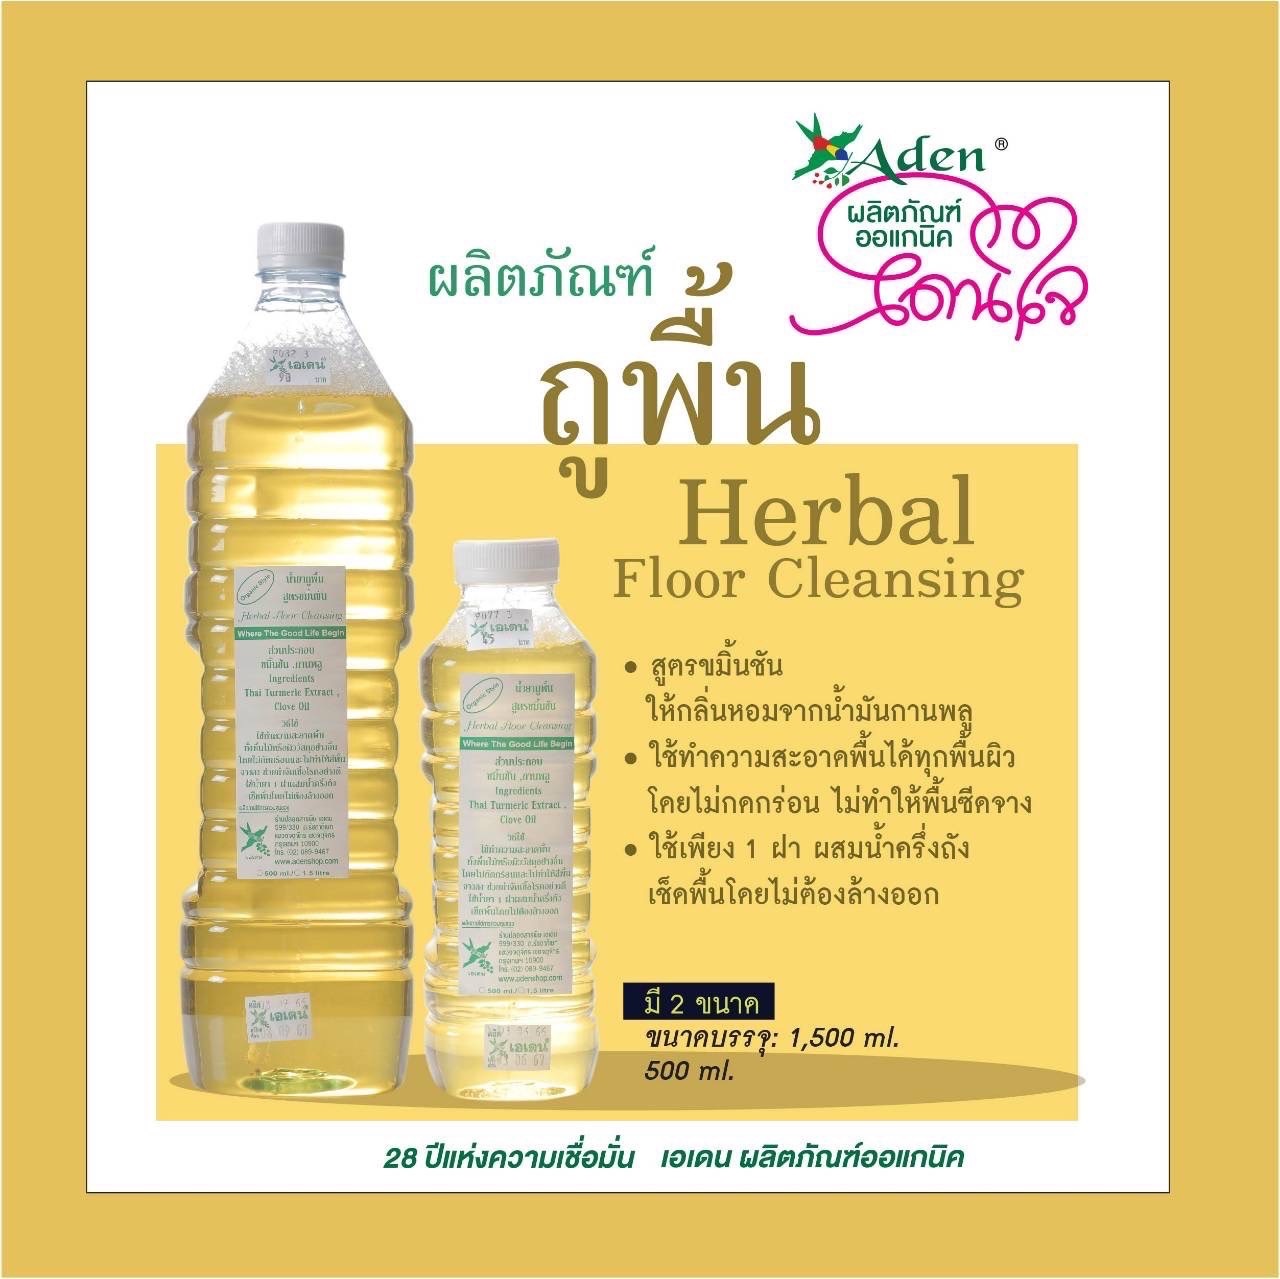 P11-0412 - : - น้ำยาถูพื้น  สูตรขมิ้นชัน ( Herbal floor cleansing-Thai turmeric extract formula)